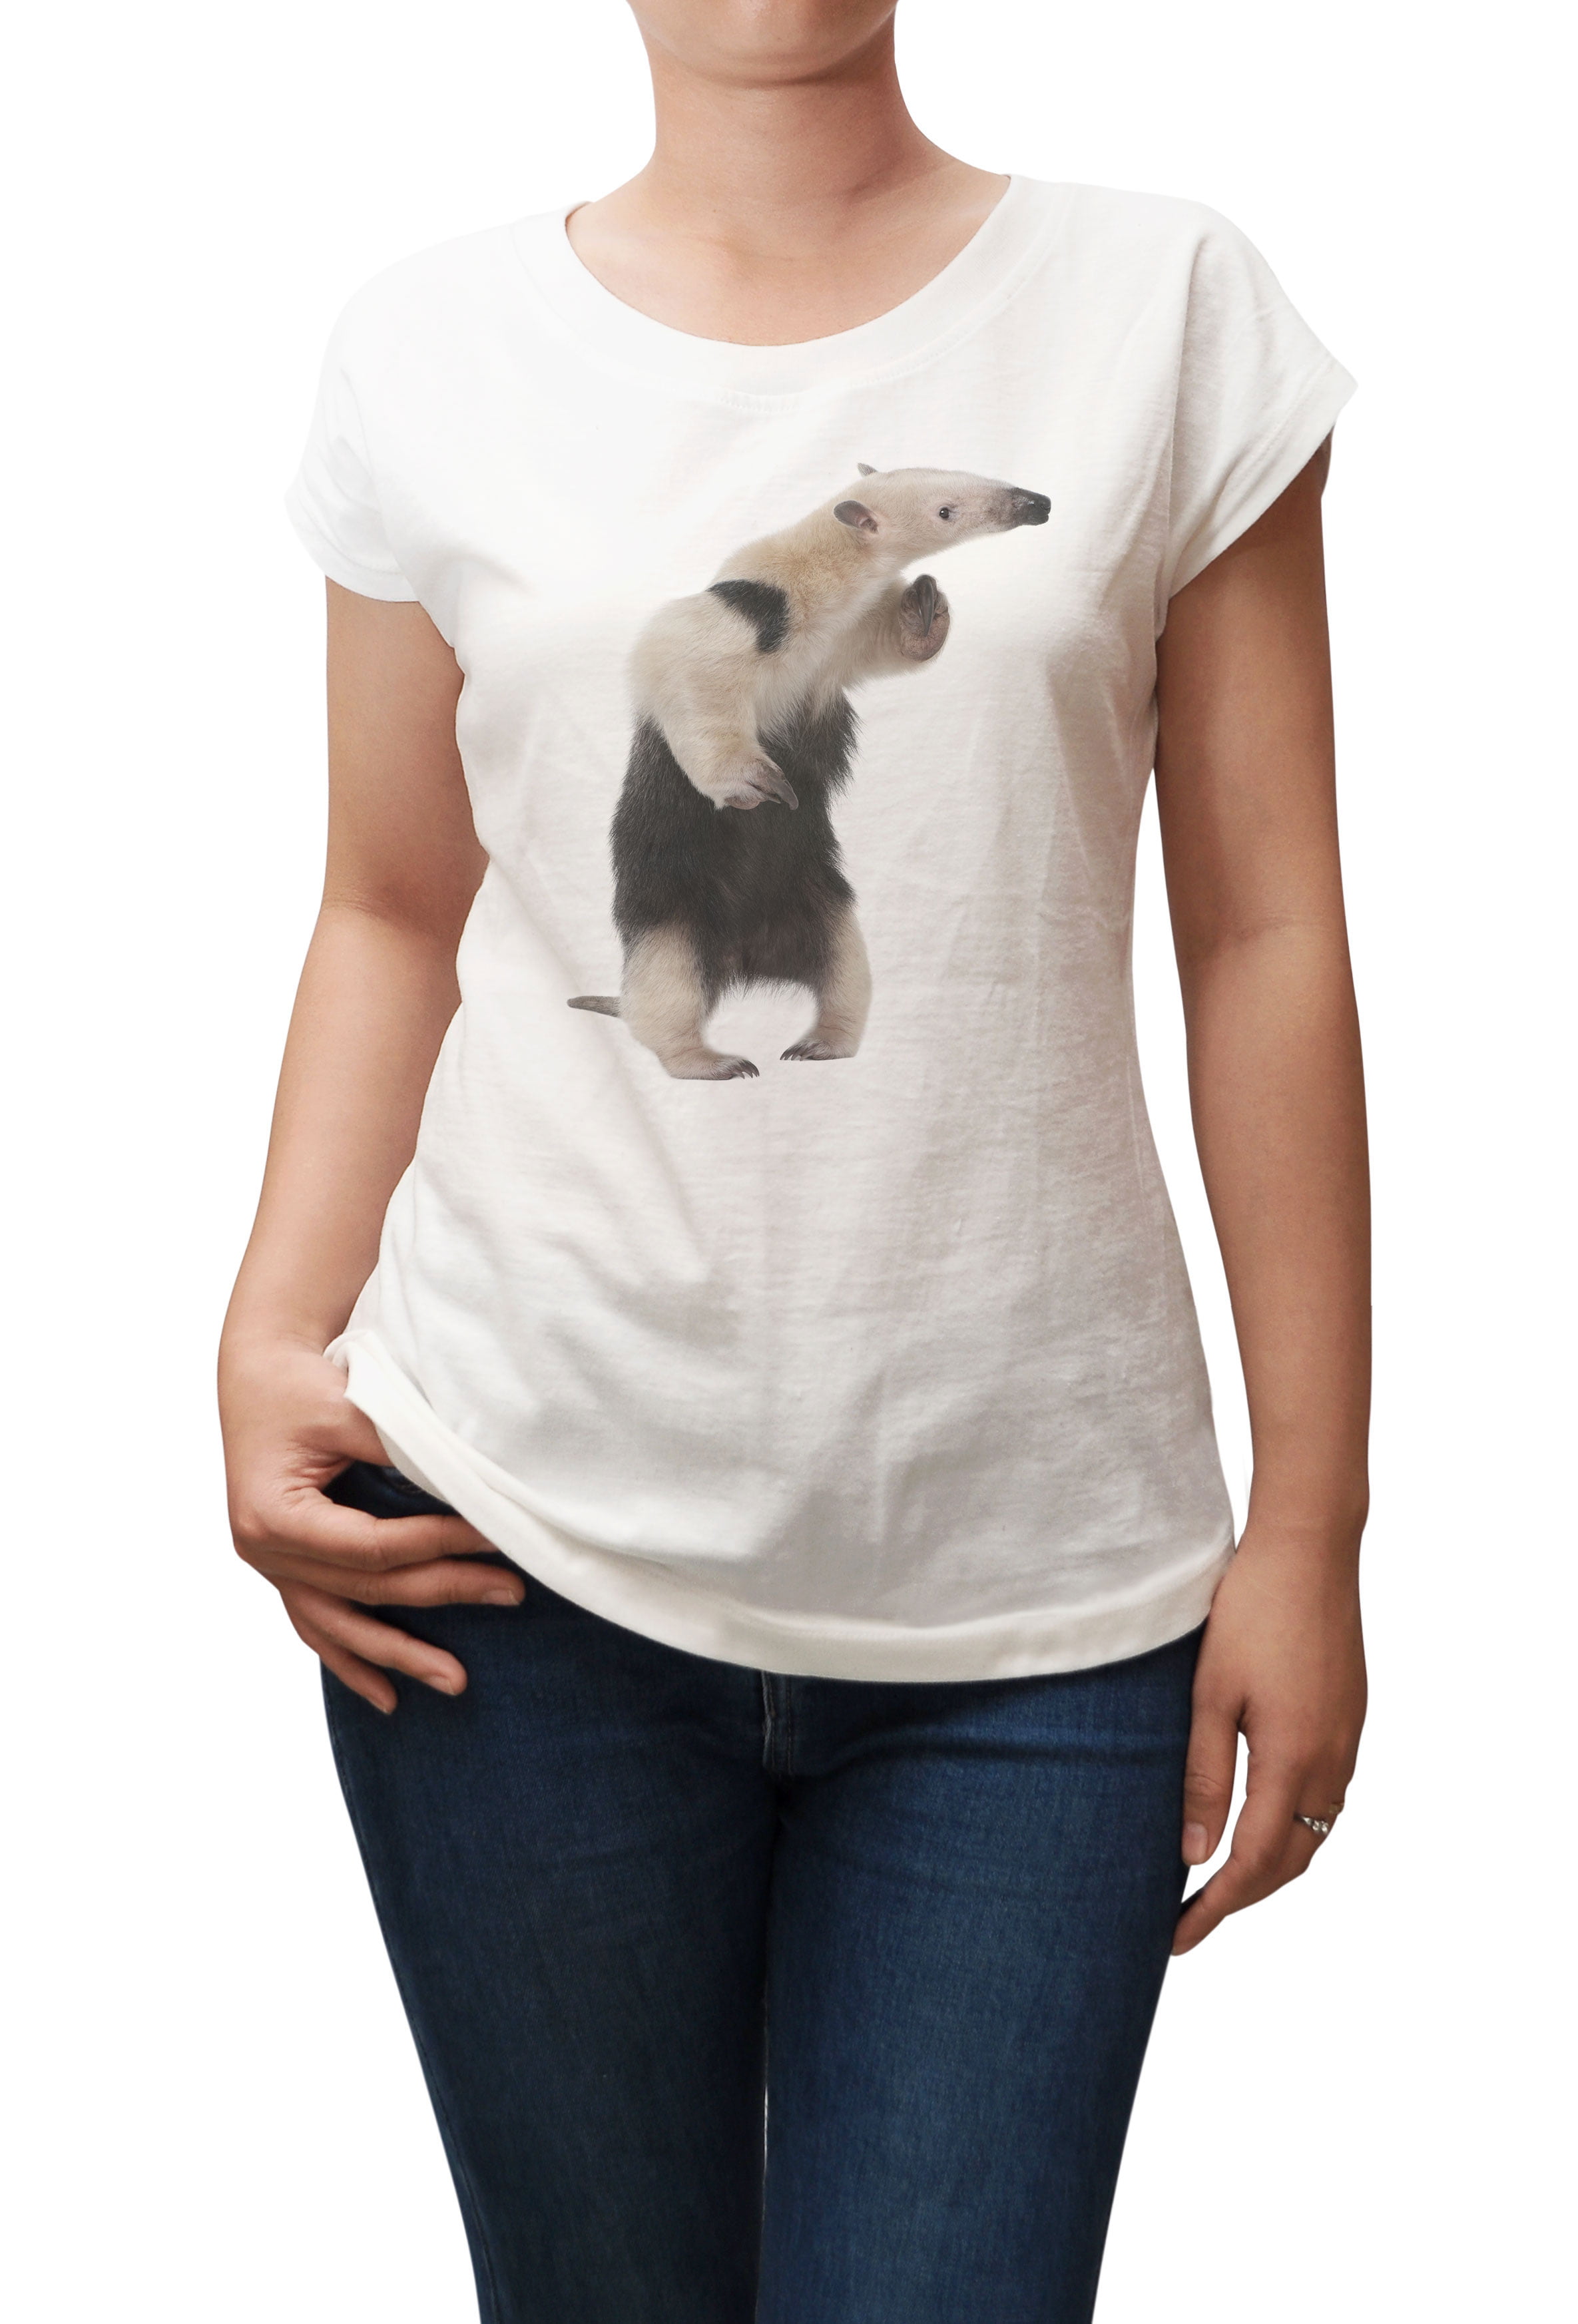 Anteater Cool Tee Shirt Love Anteater Tshirt 